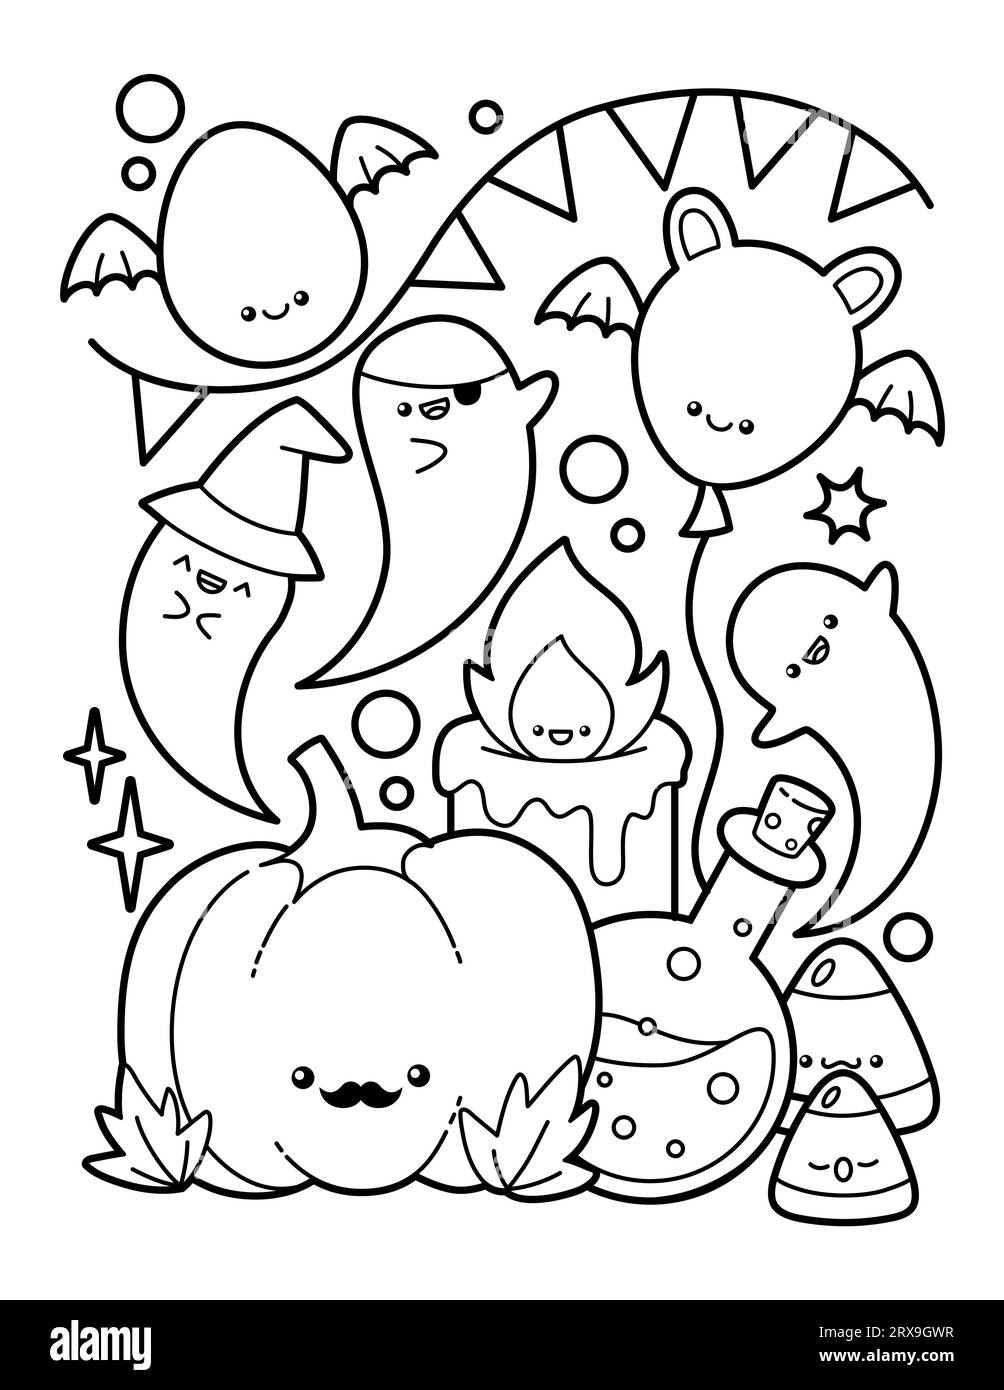 Cute And Kawaii Halloween Coloring Page Stock Vector Image & Art - Alamy